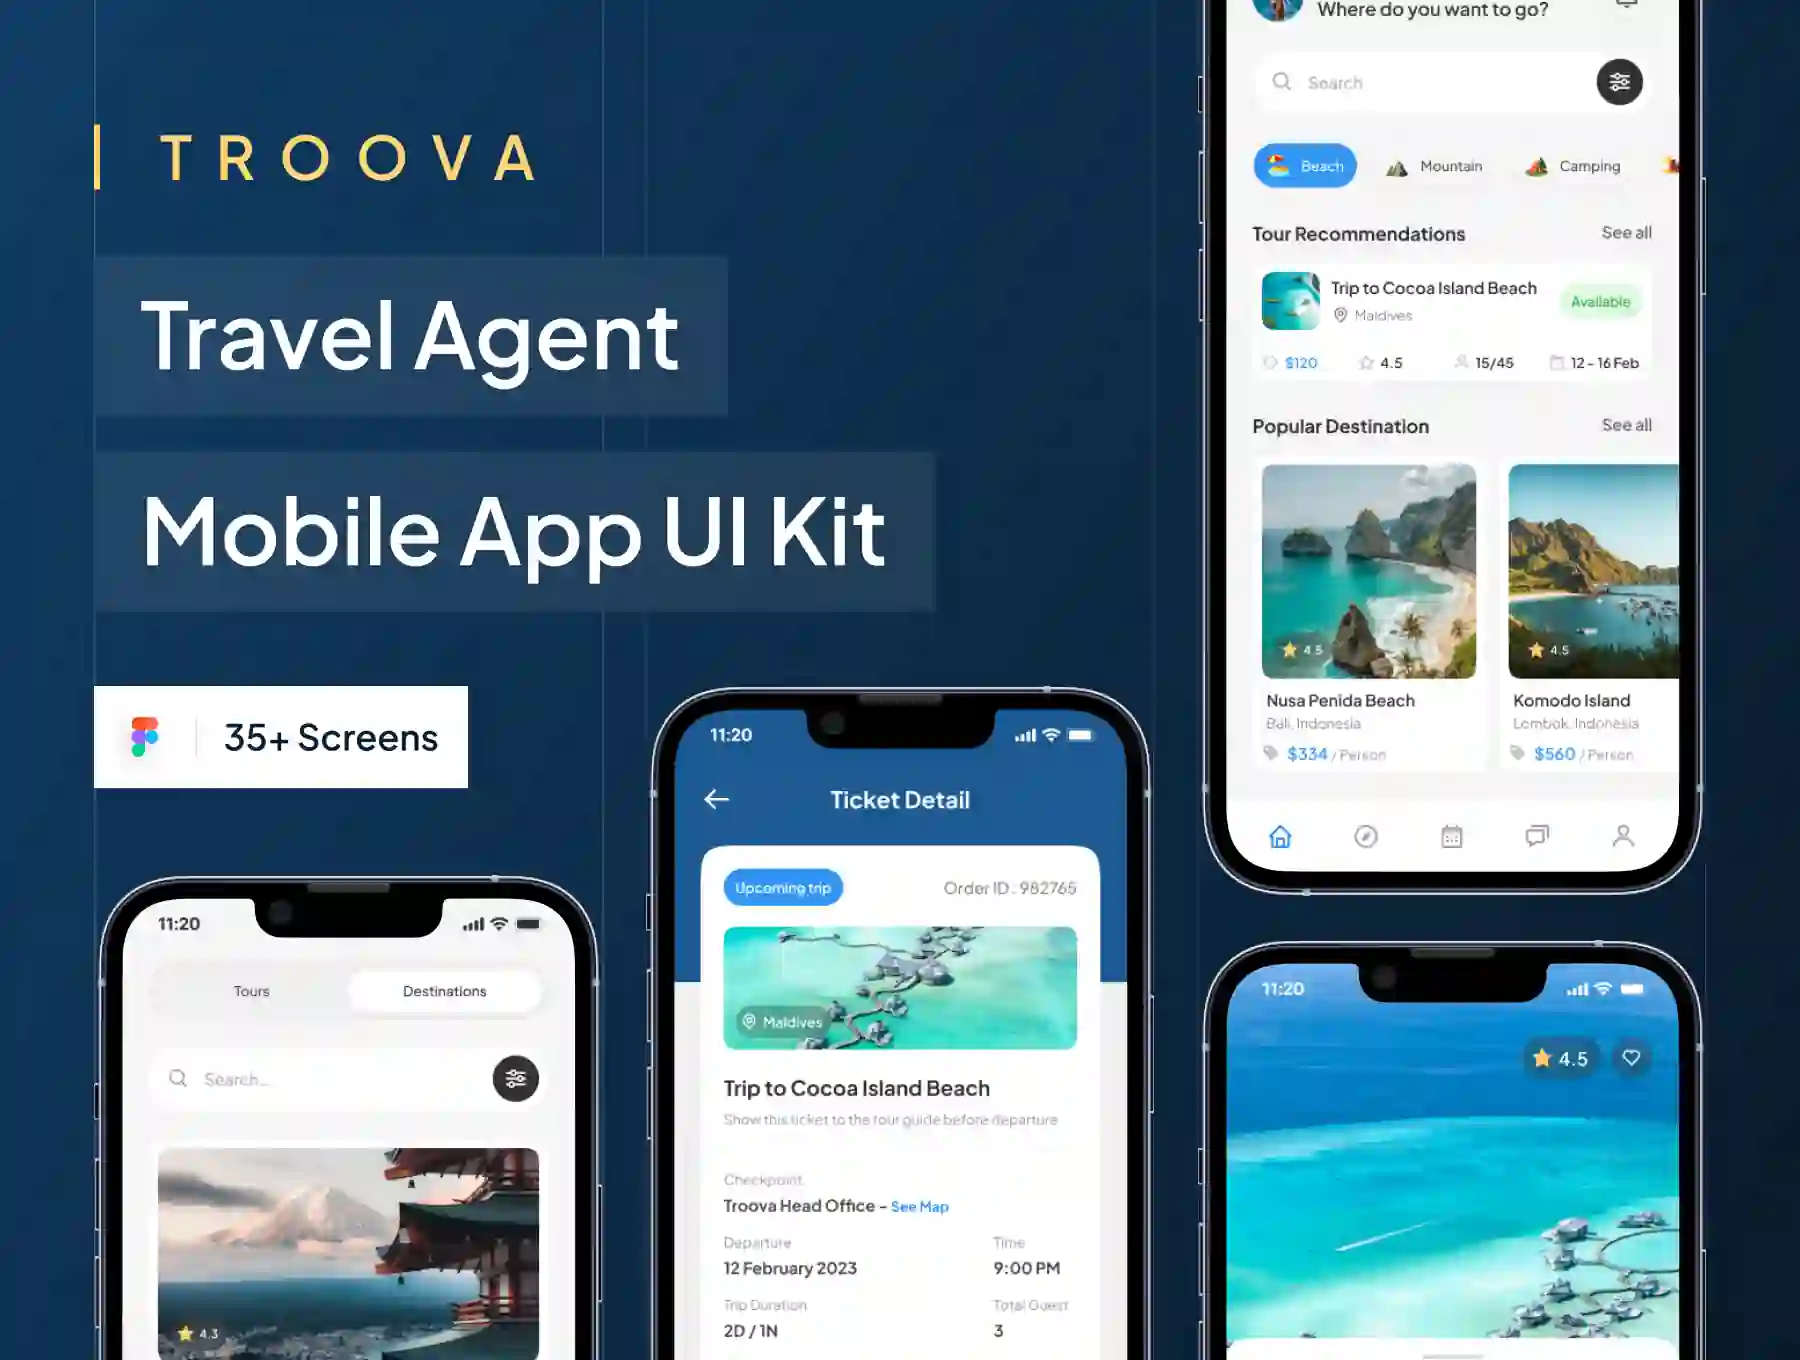 TROOVA - Travel Agent Mobile App UI Kit